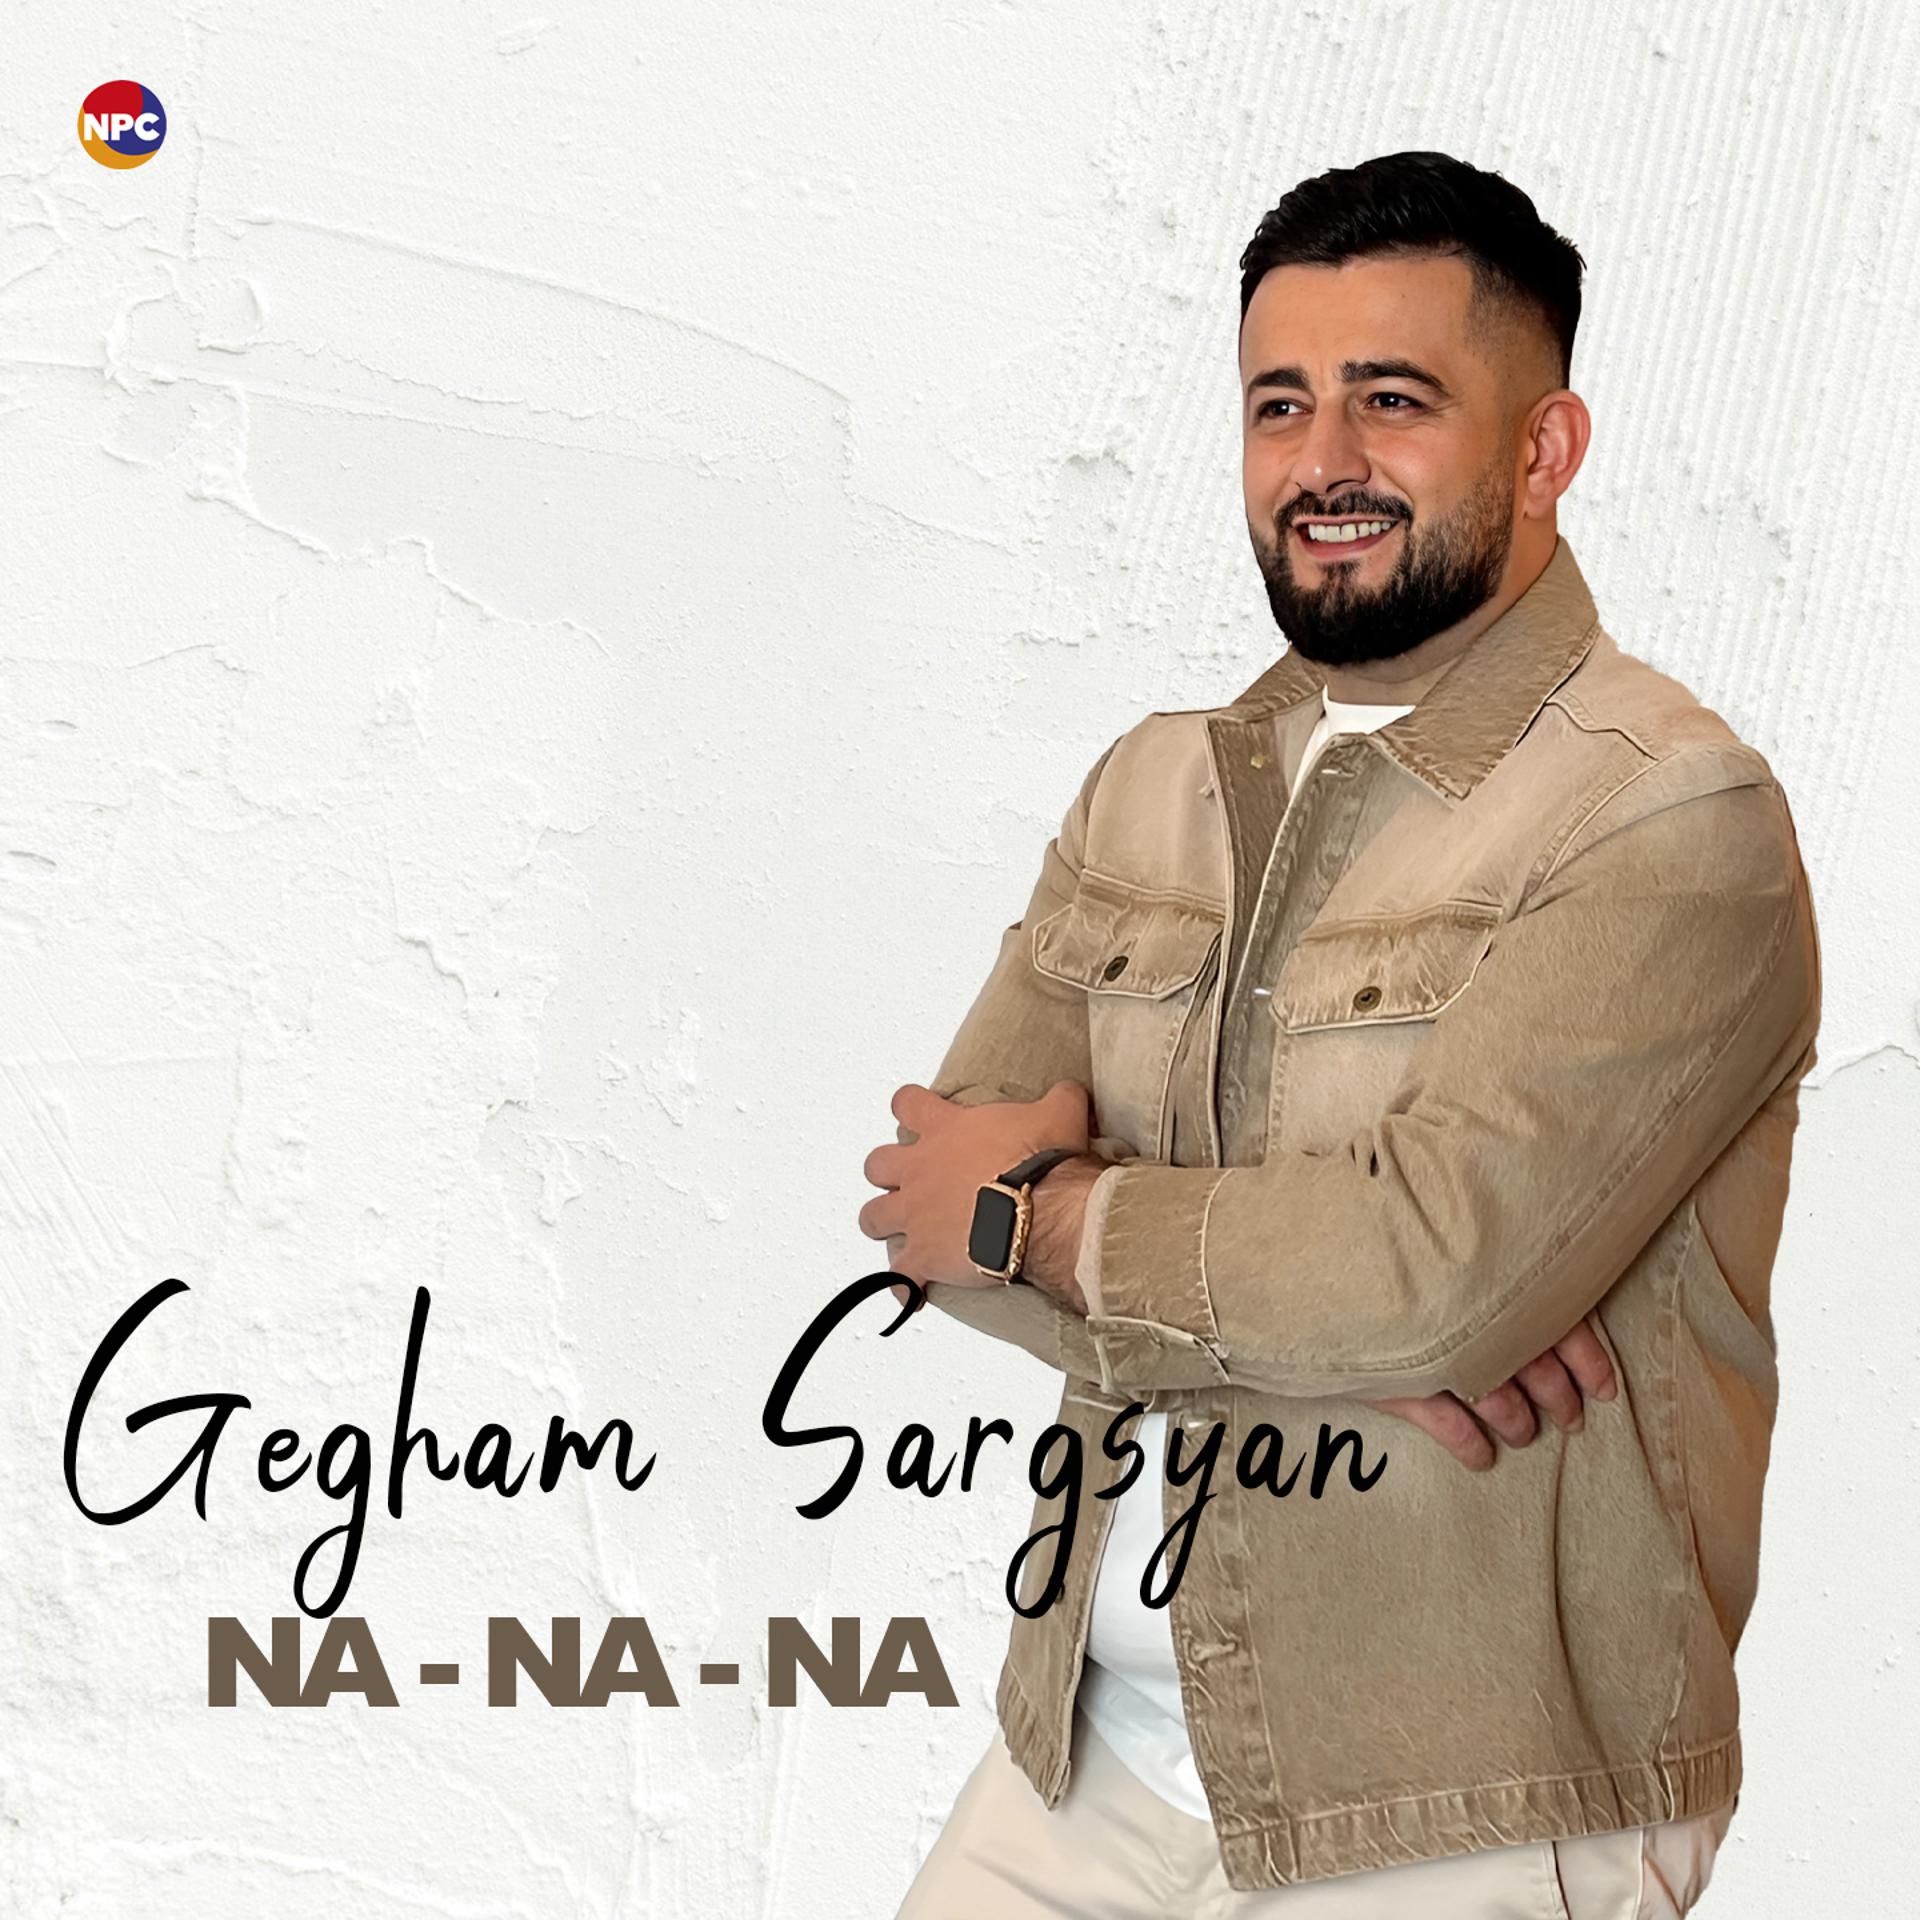 Gegham Sargsyan - фото